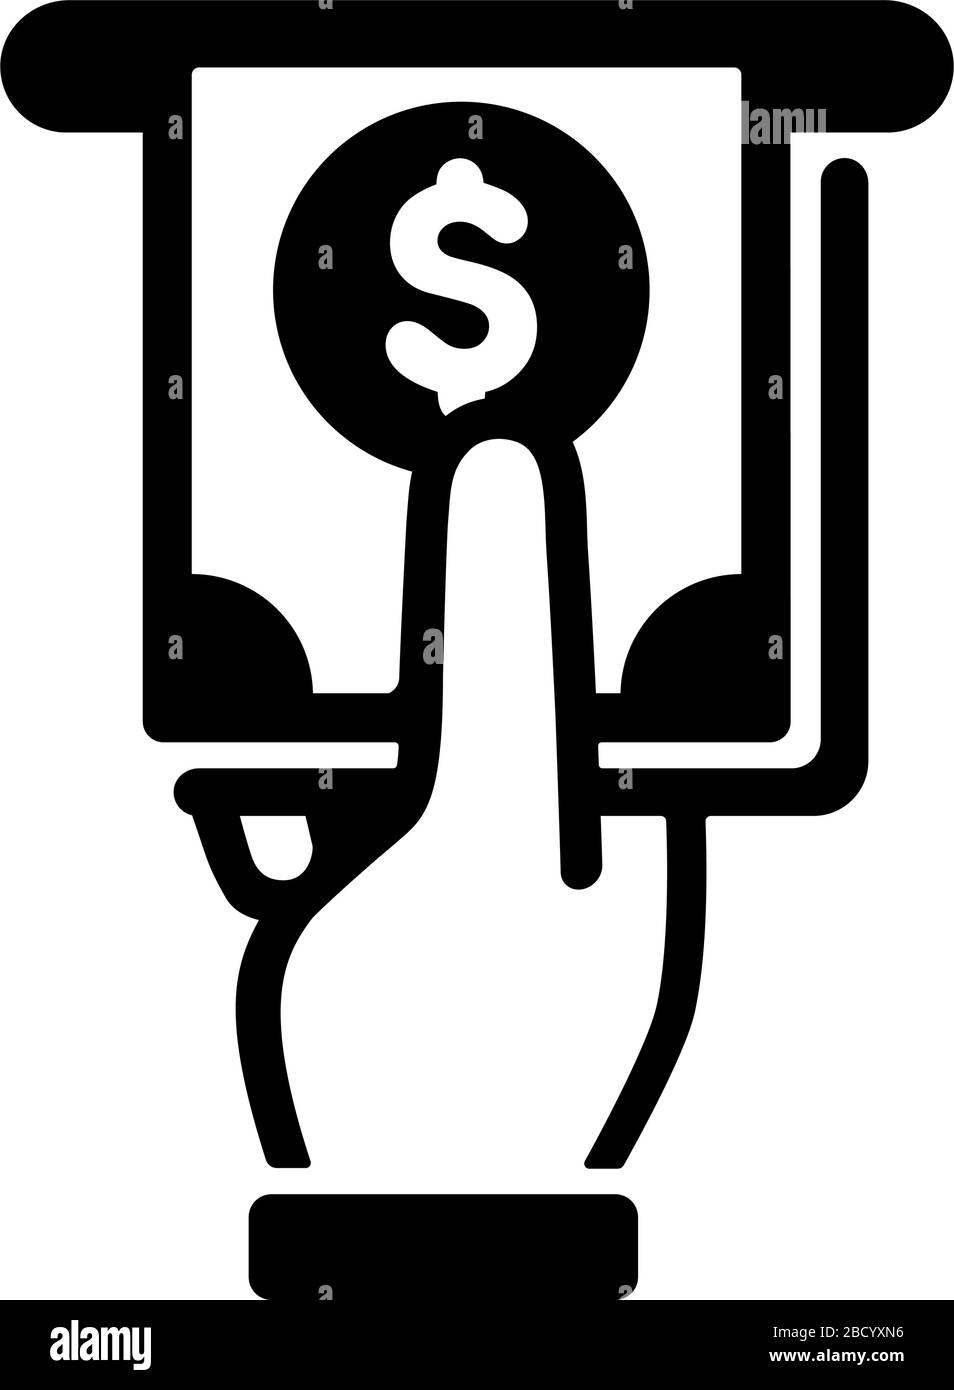 ATM, cash dispenser, deposit, bank vector icon illustration (US dollar) Stock Vector